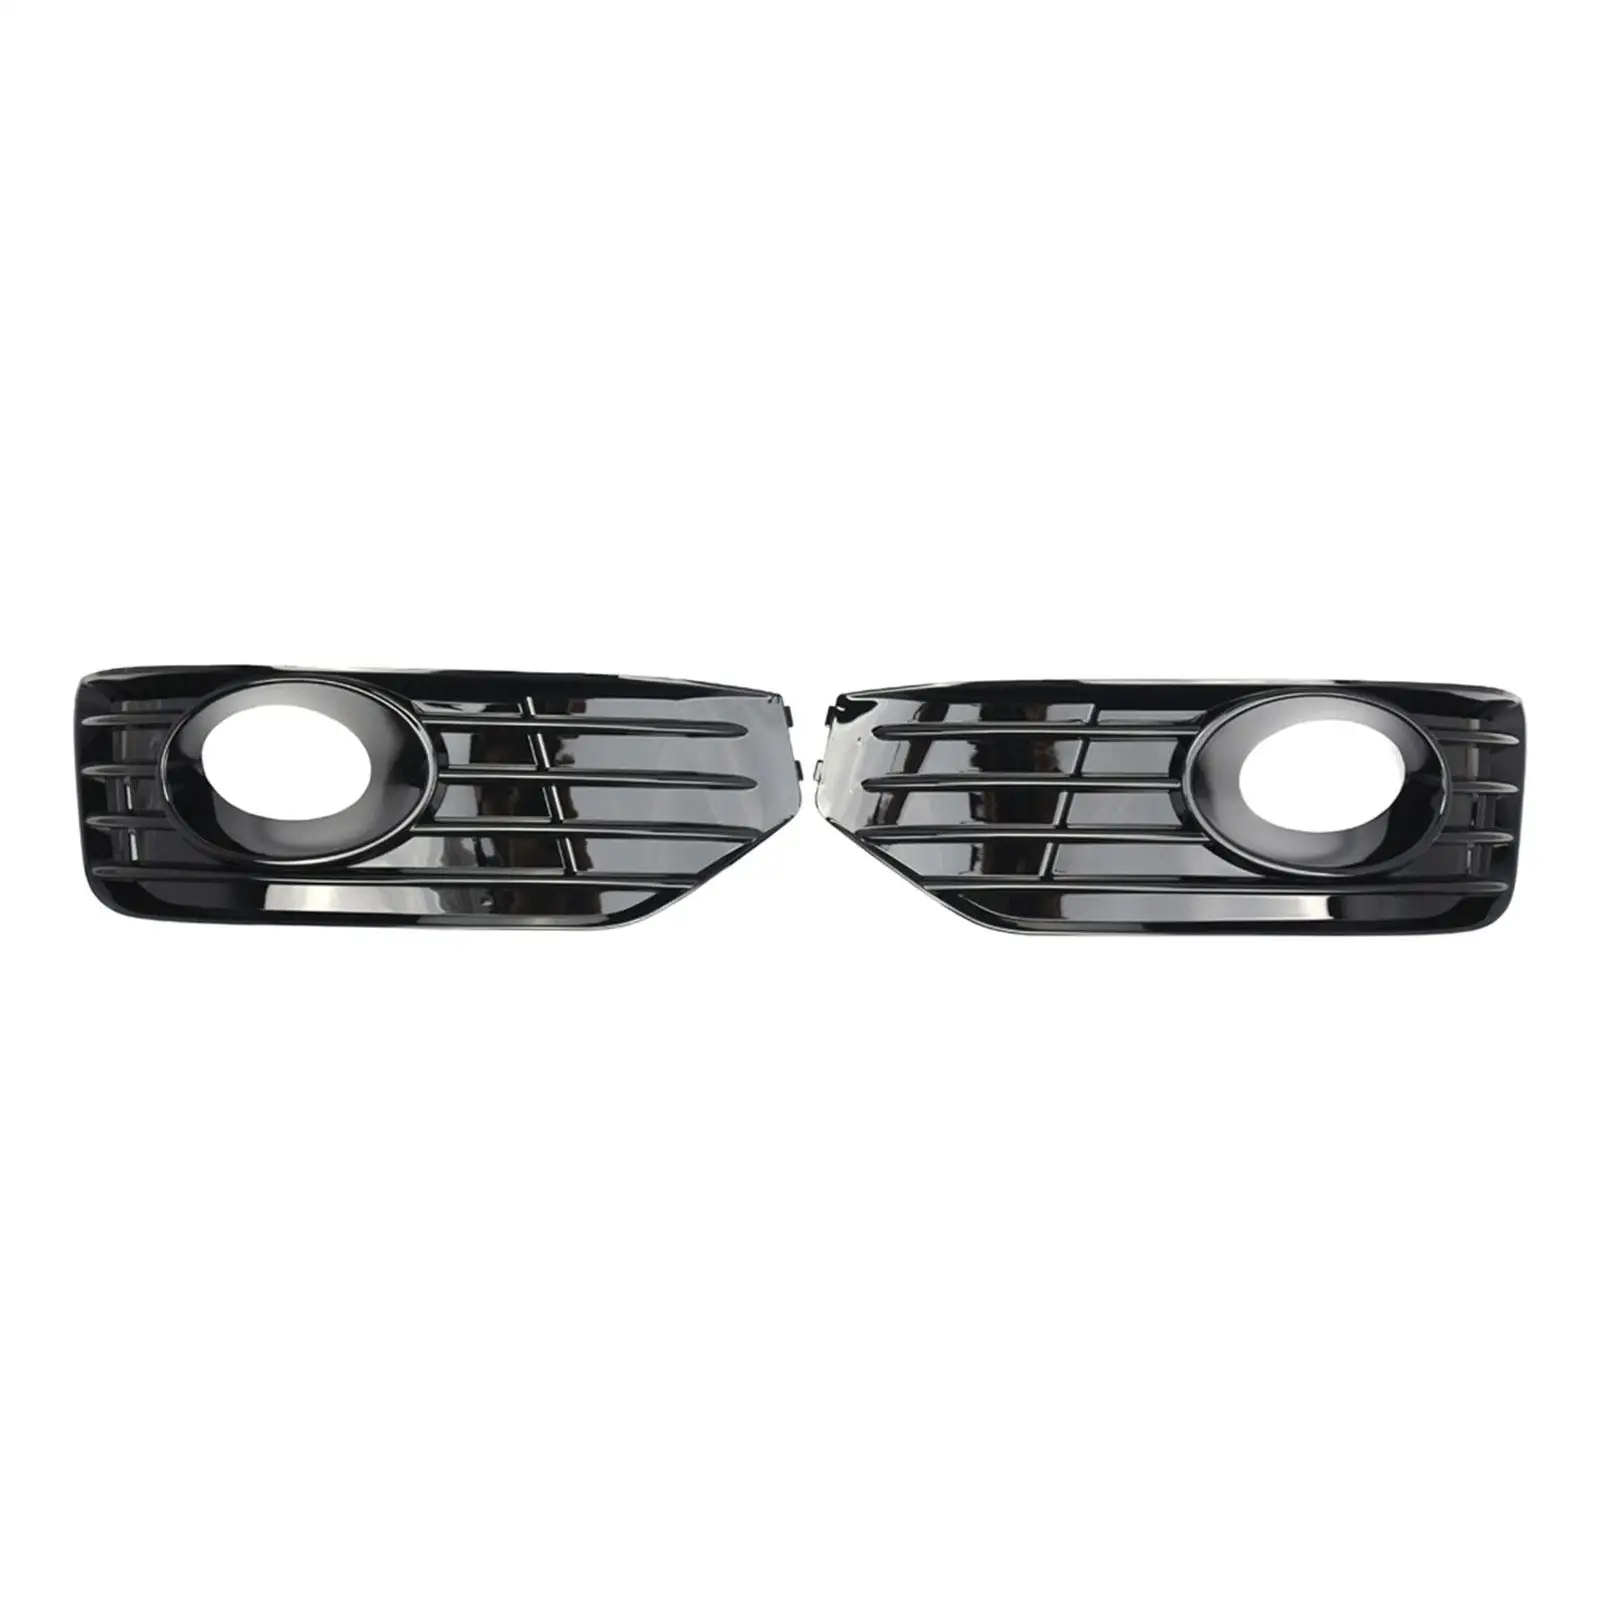 2 Pieces Fog Light Grilles Replaces Car Accessories Car Front Bumper Left Side Right Side for VW T5.1 Sportline 2010-2015